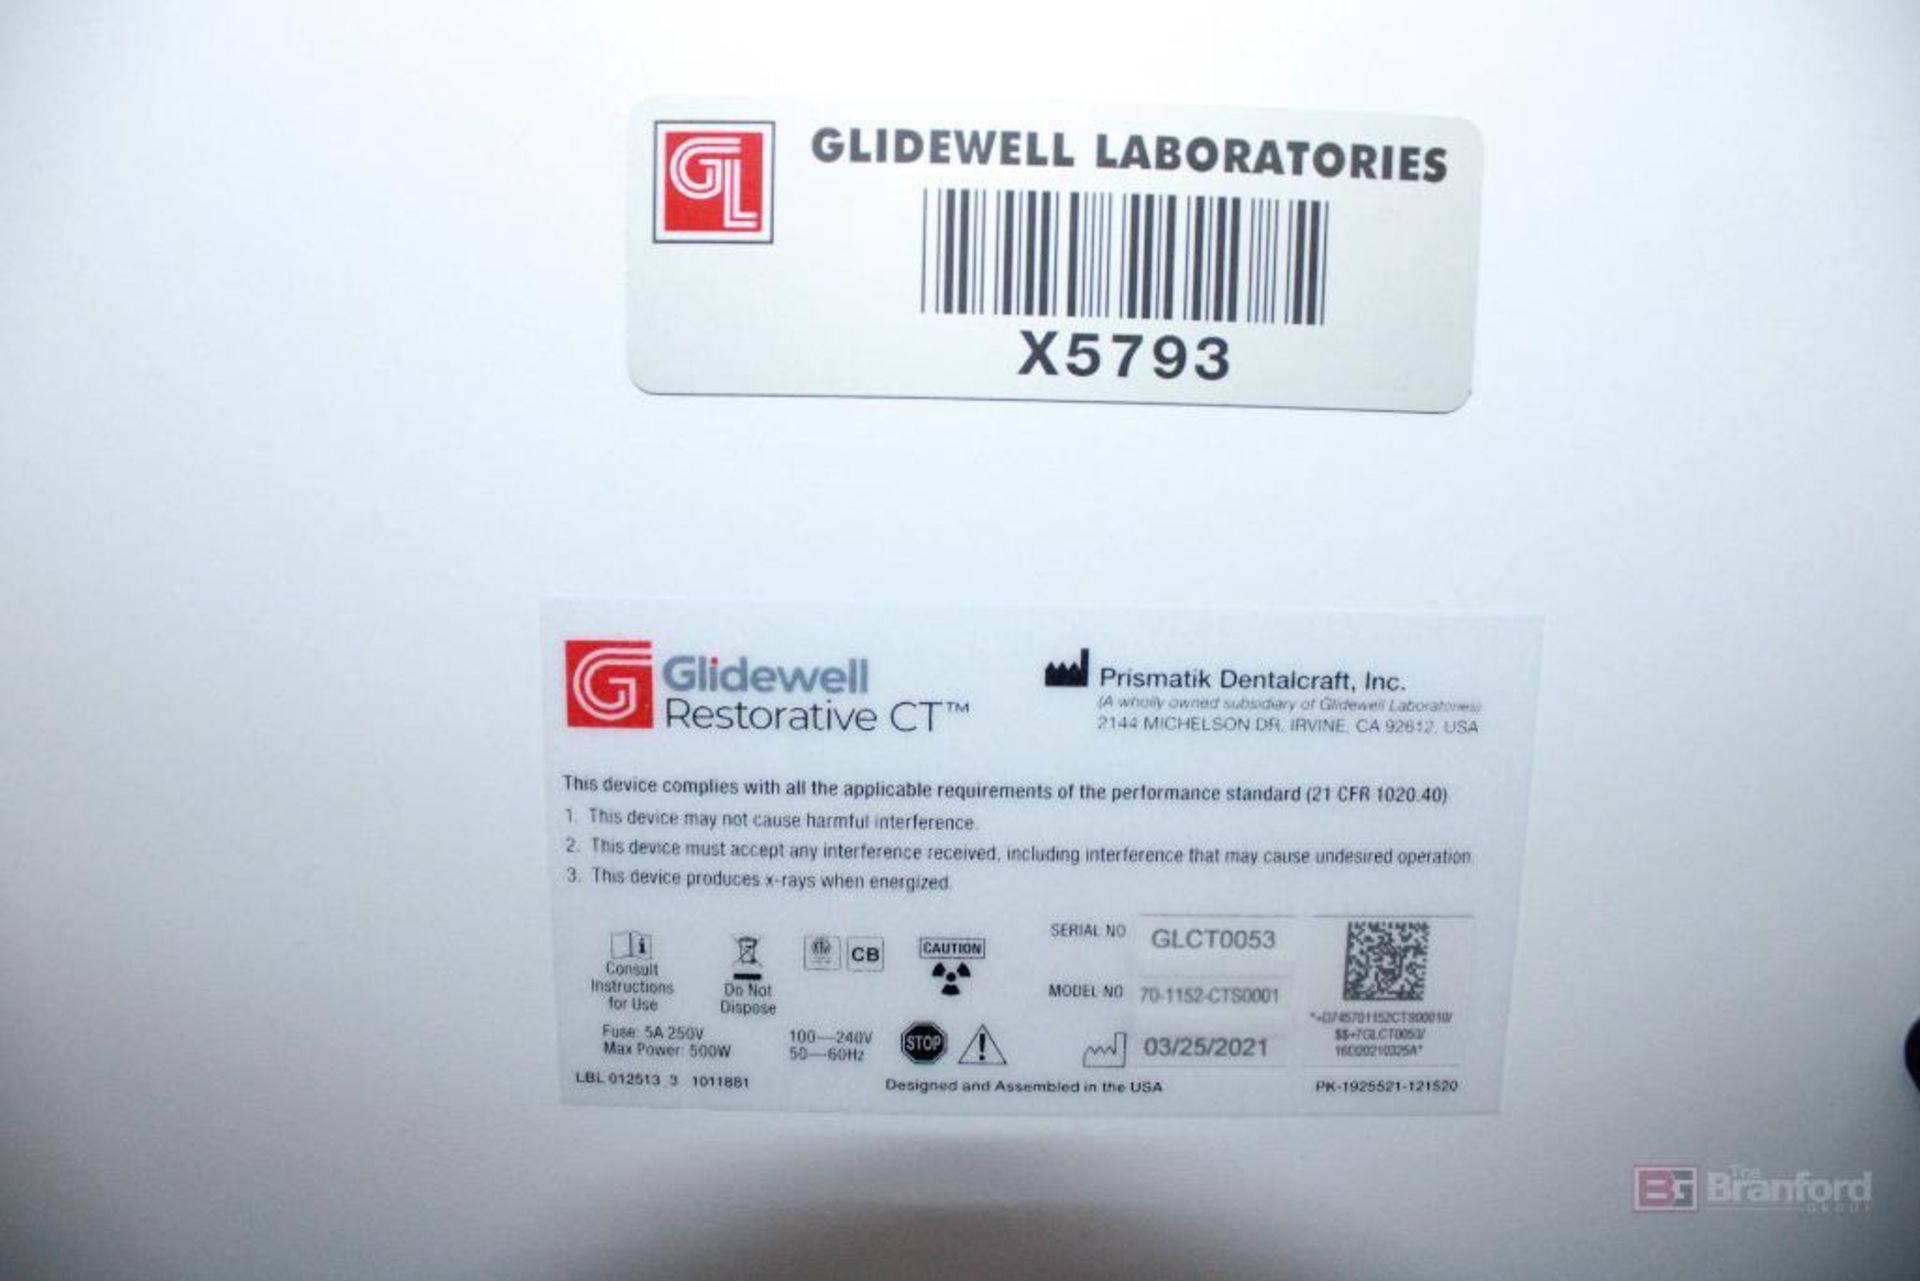 Glidewell Restorative CT Scanner (2021) - Image 3 of 4